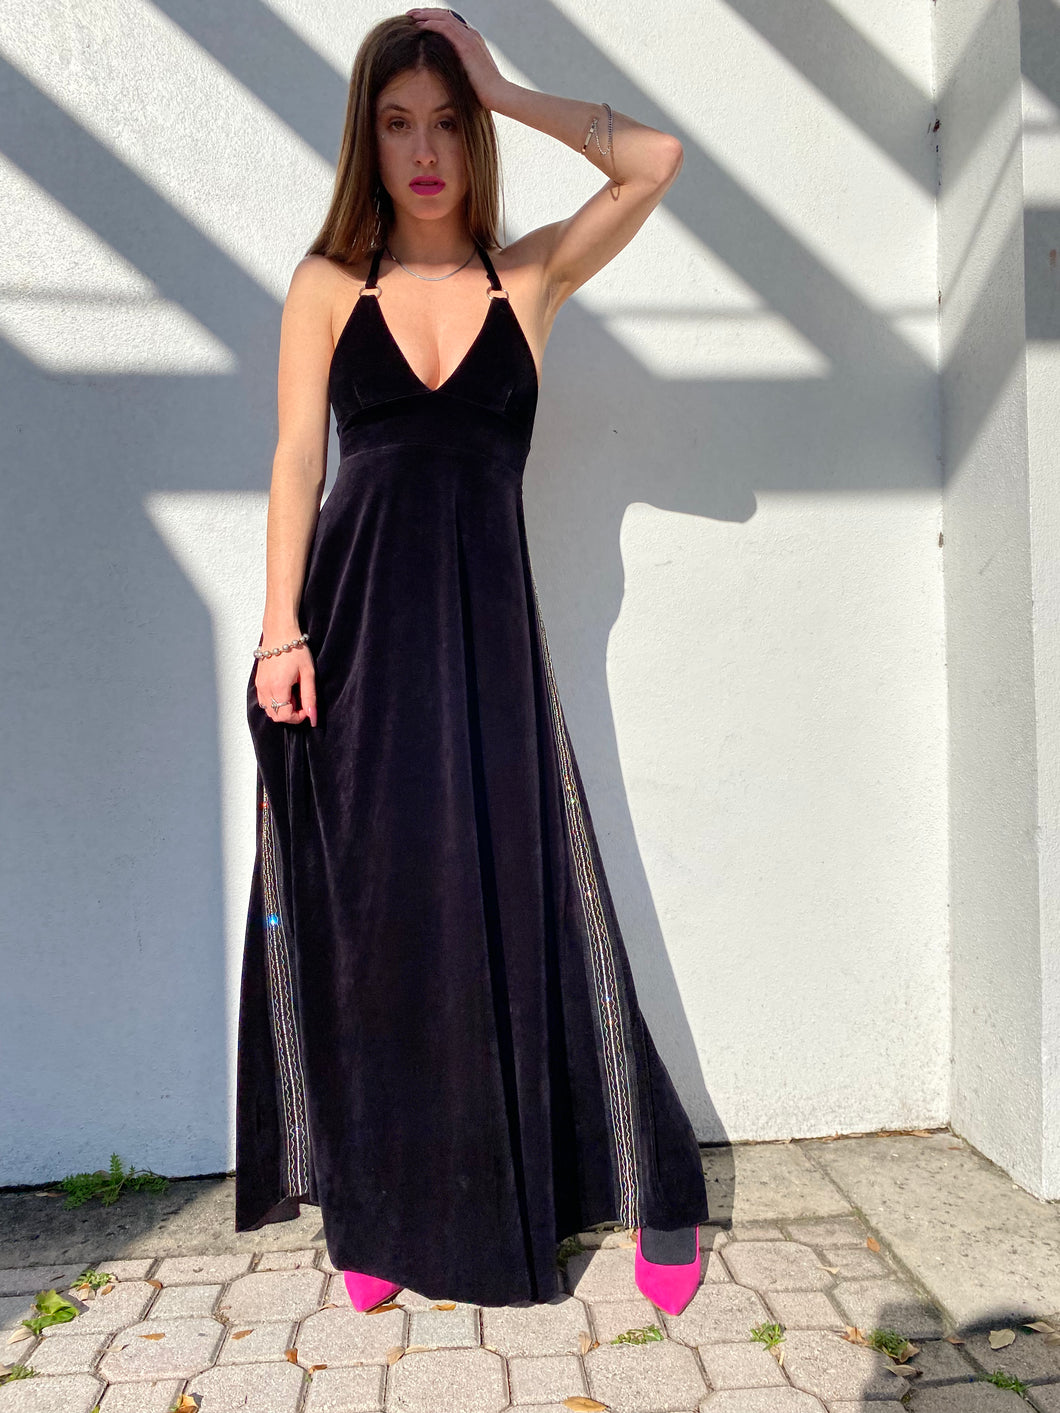 1/1 Monroe Maxi Dress - Ethereal Glam (Small)